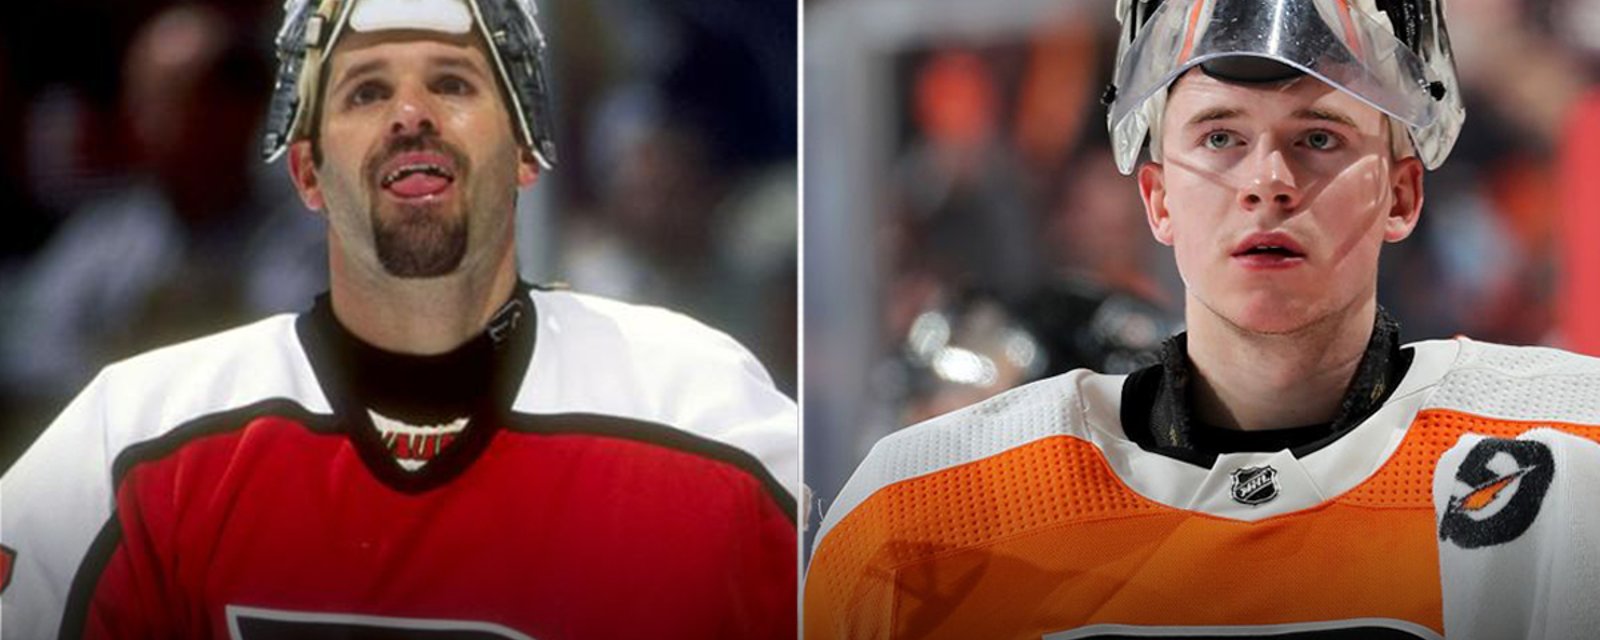 Hextall opens up for the first time since firing, criticizes Flyers’ handling of rookie Carter Hart